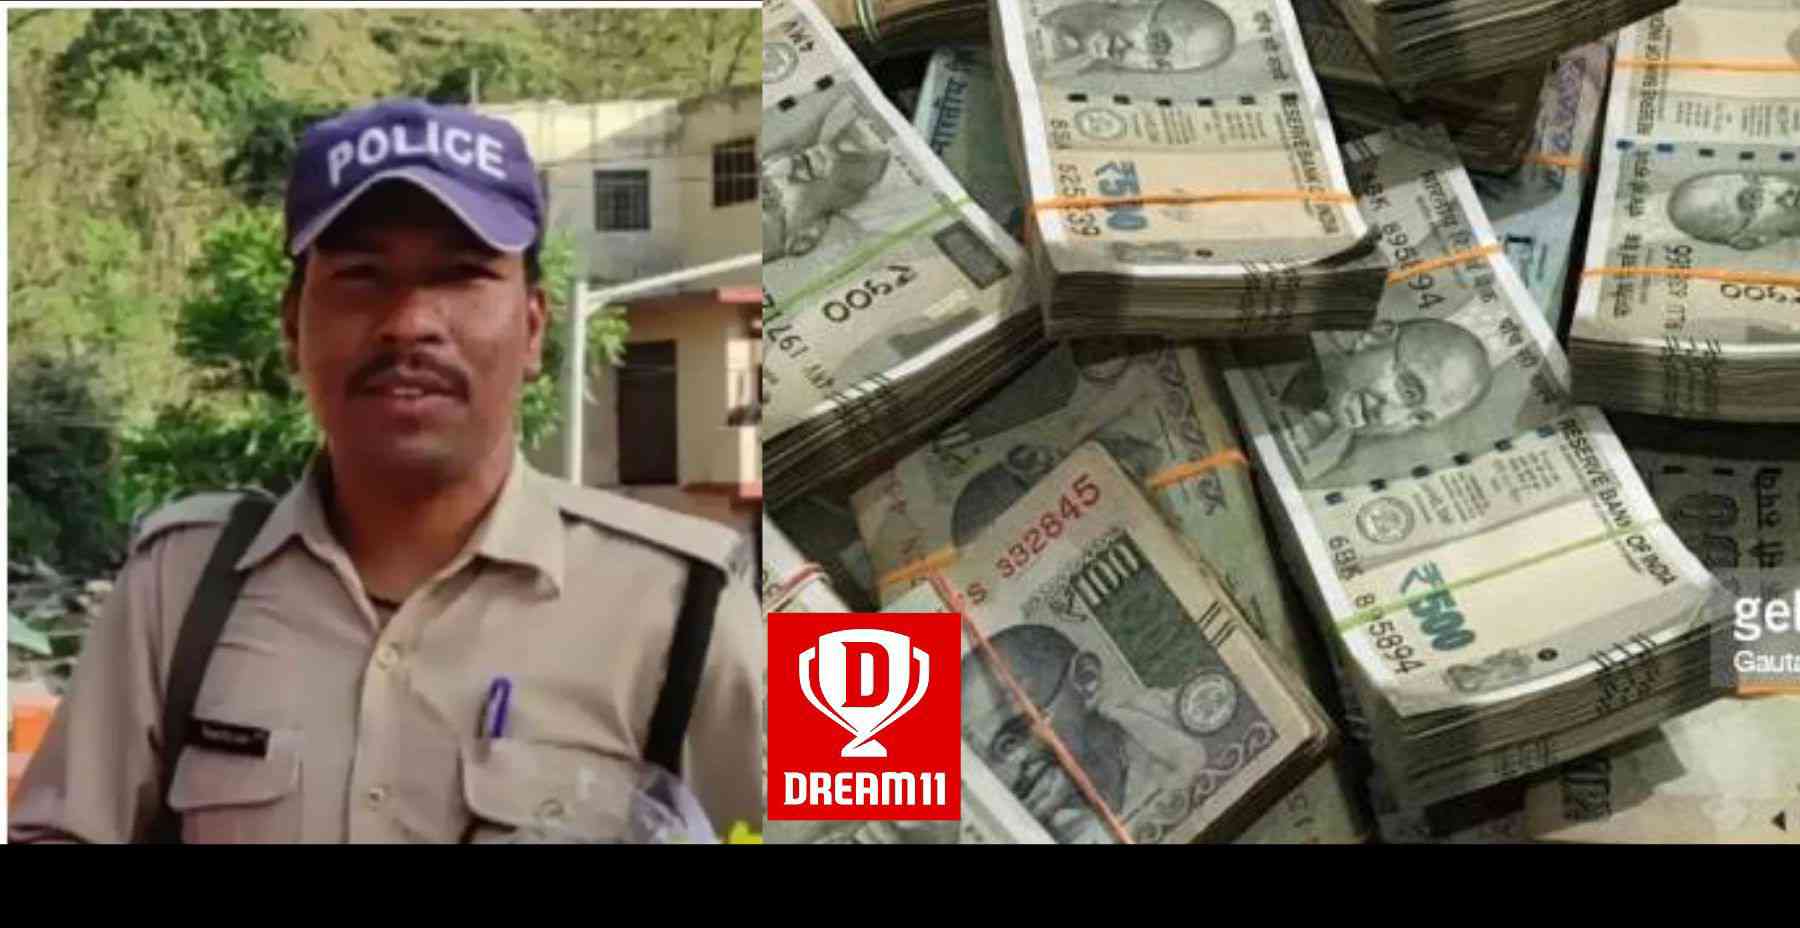 Uttarakhand police jawan Kailash Singh Rawat of Rudraprayag became a millionaire from dream11.